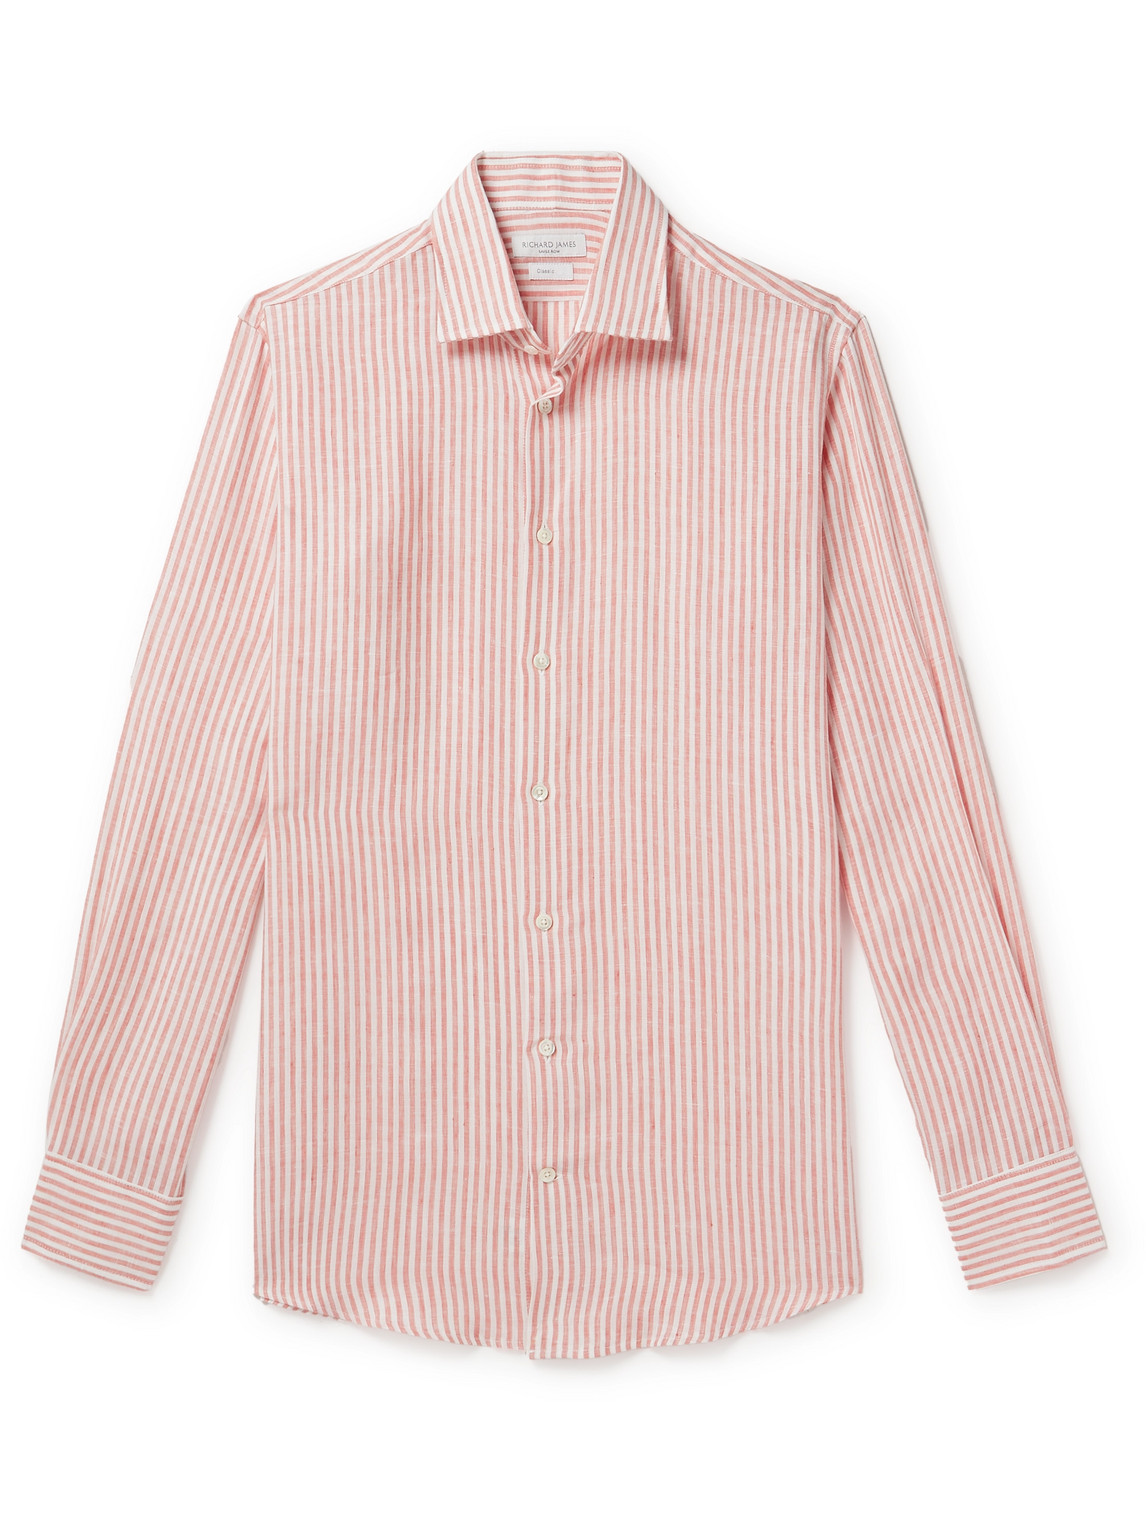 Richard James - Striped Linen Shirt - Men - Pink - UK/US 16 von Richard James